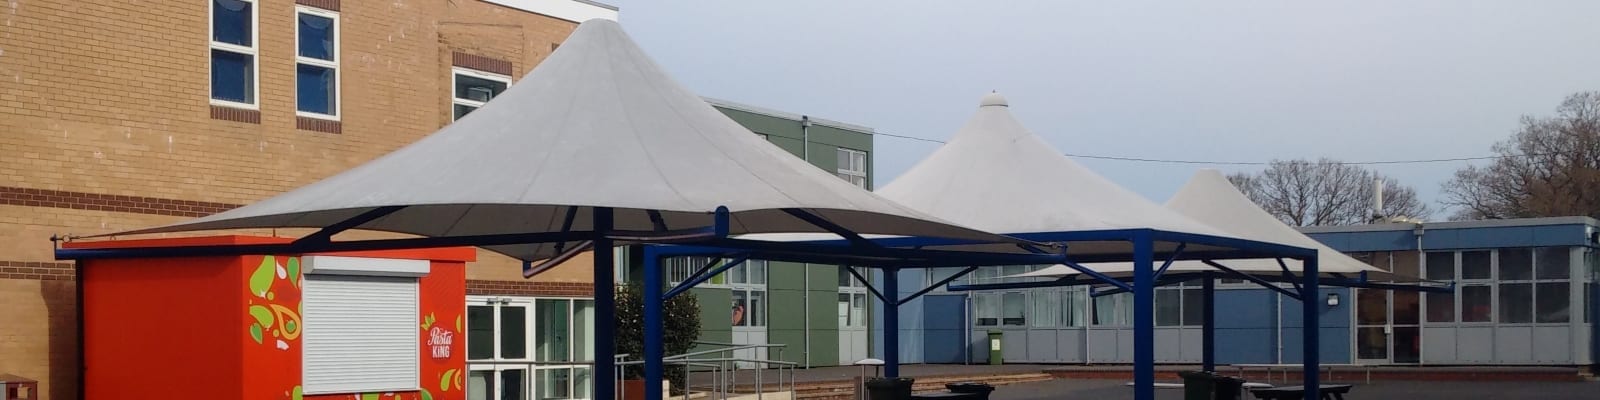 Lighthall School Fabric Canopies